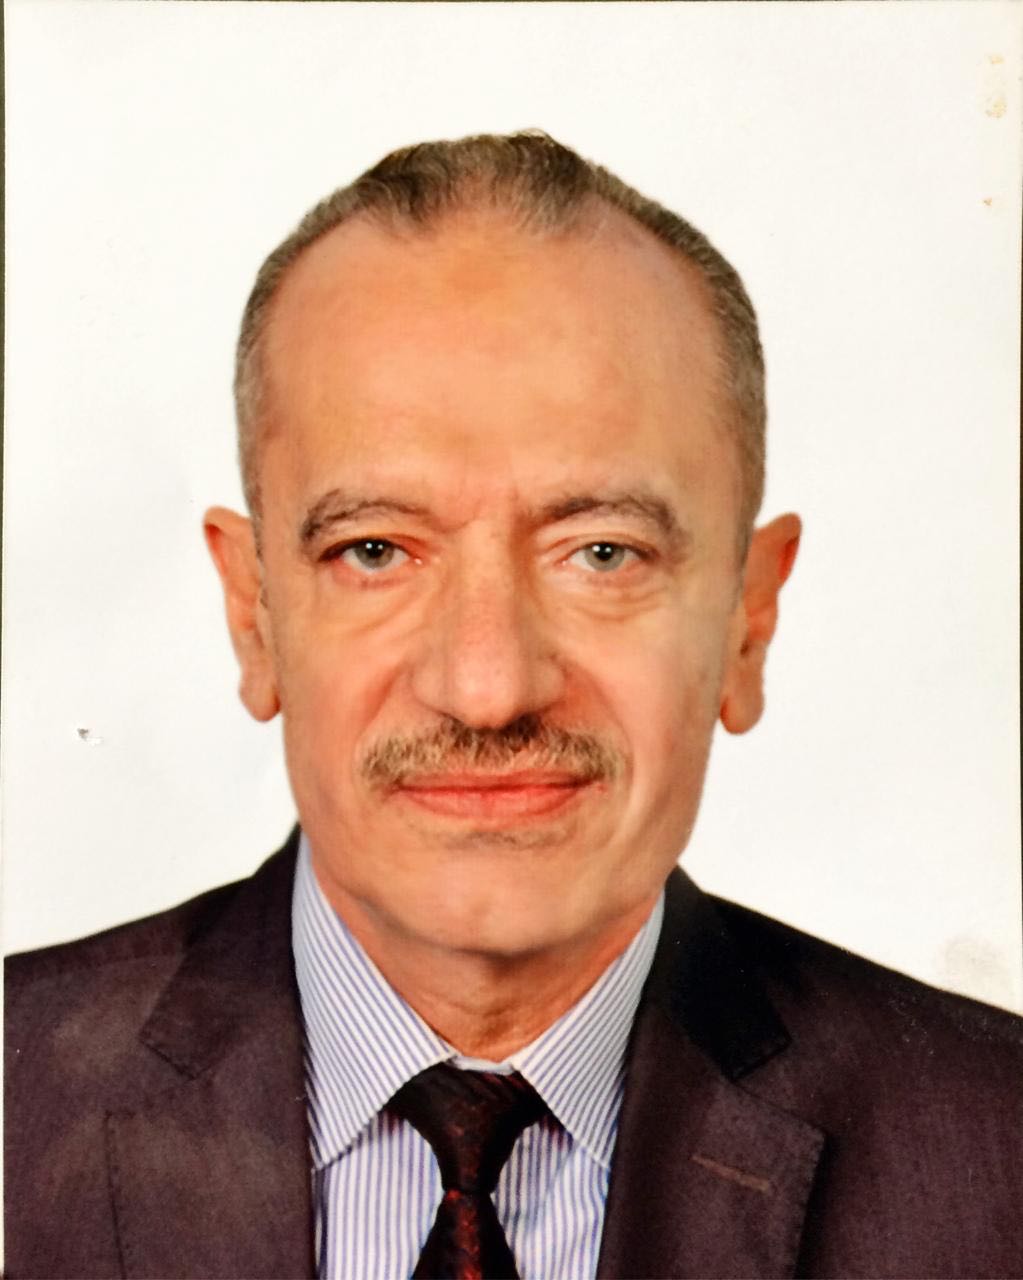 دكتور محمد منصور